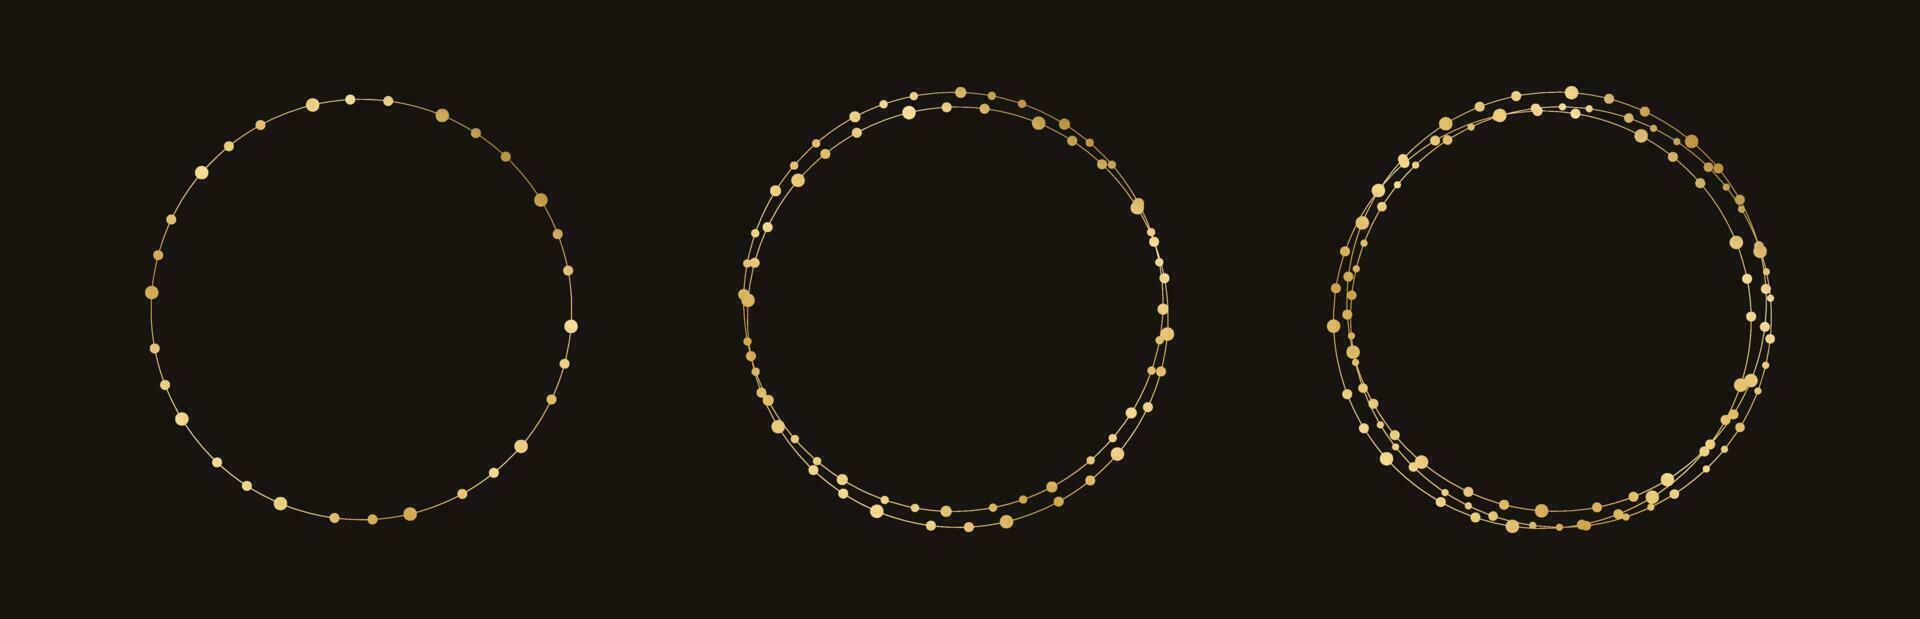 goud ronde Kerstmis fee lichten kader grens set. abstract gouden dots cirkel kader verzameling. vector